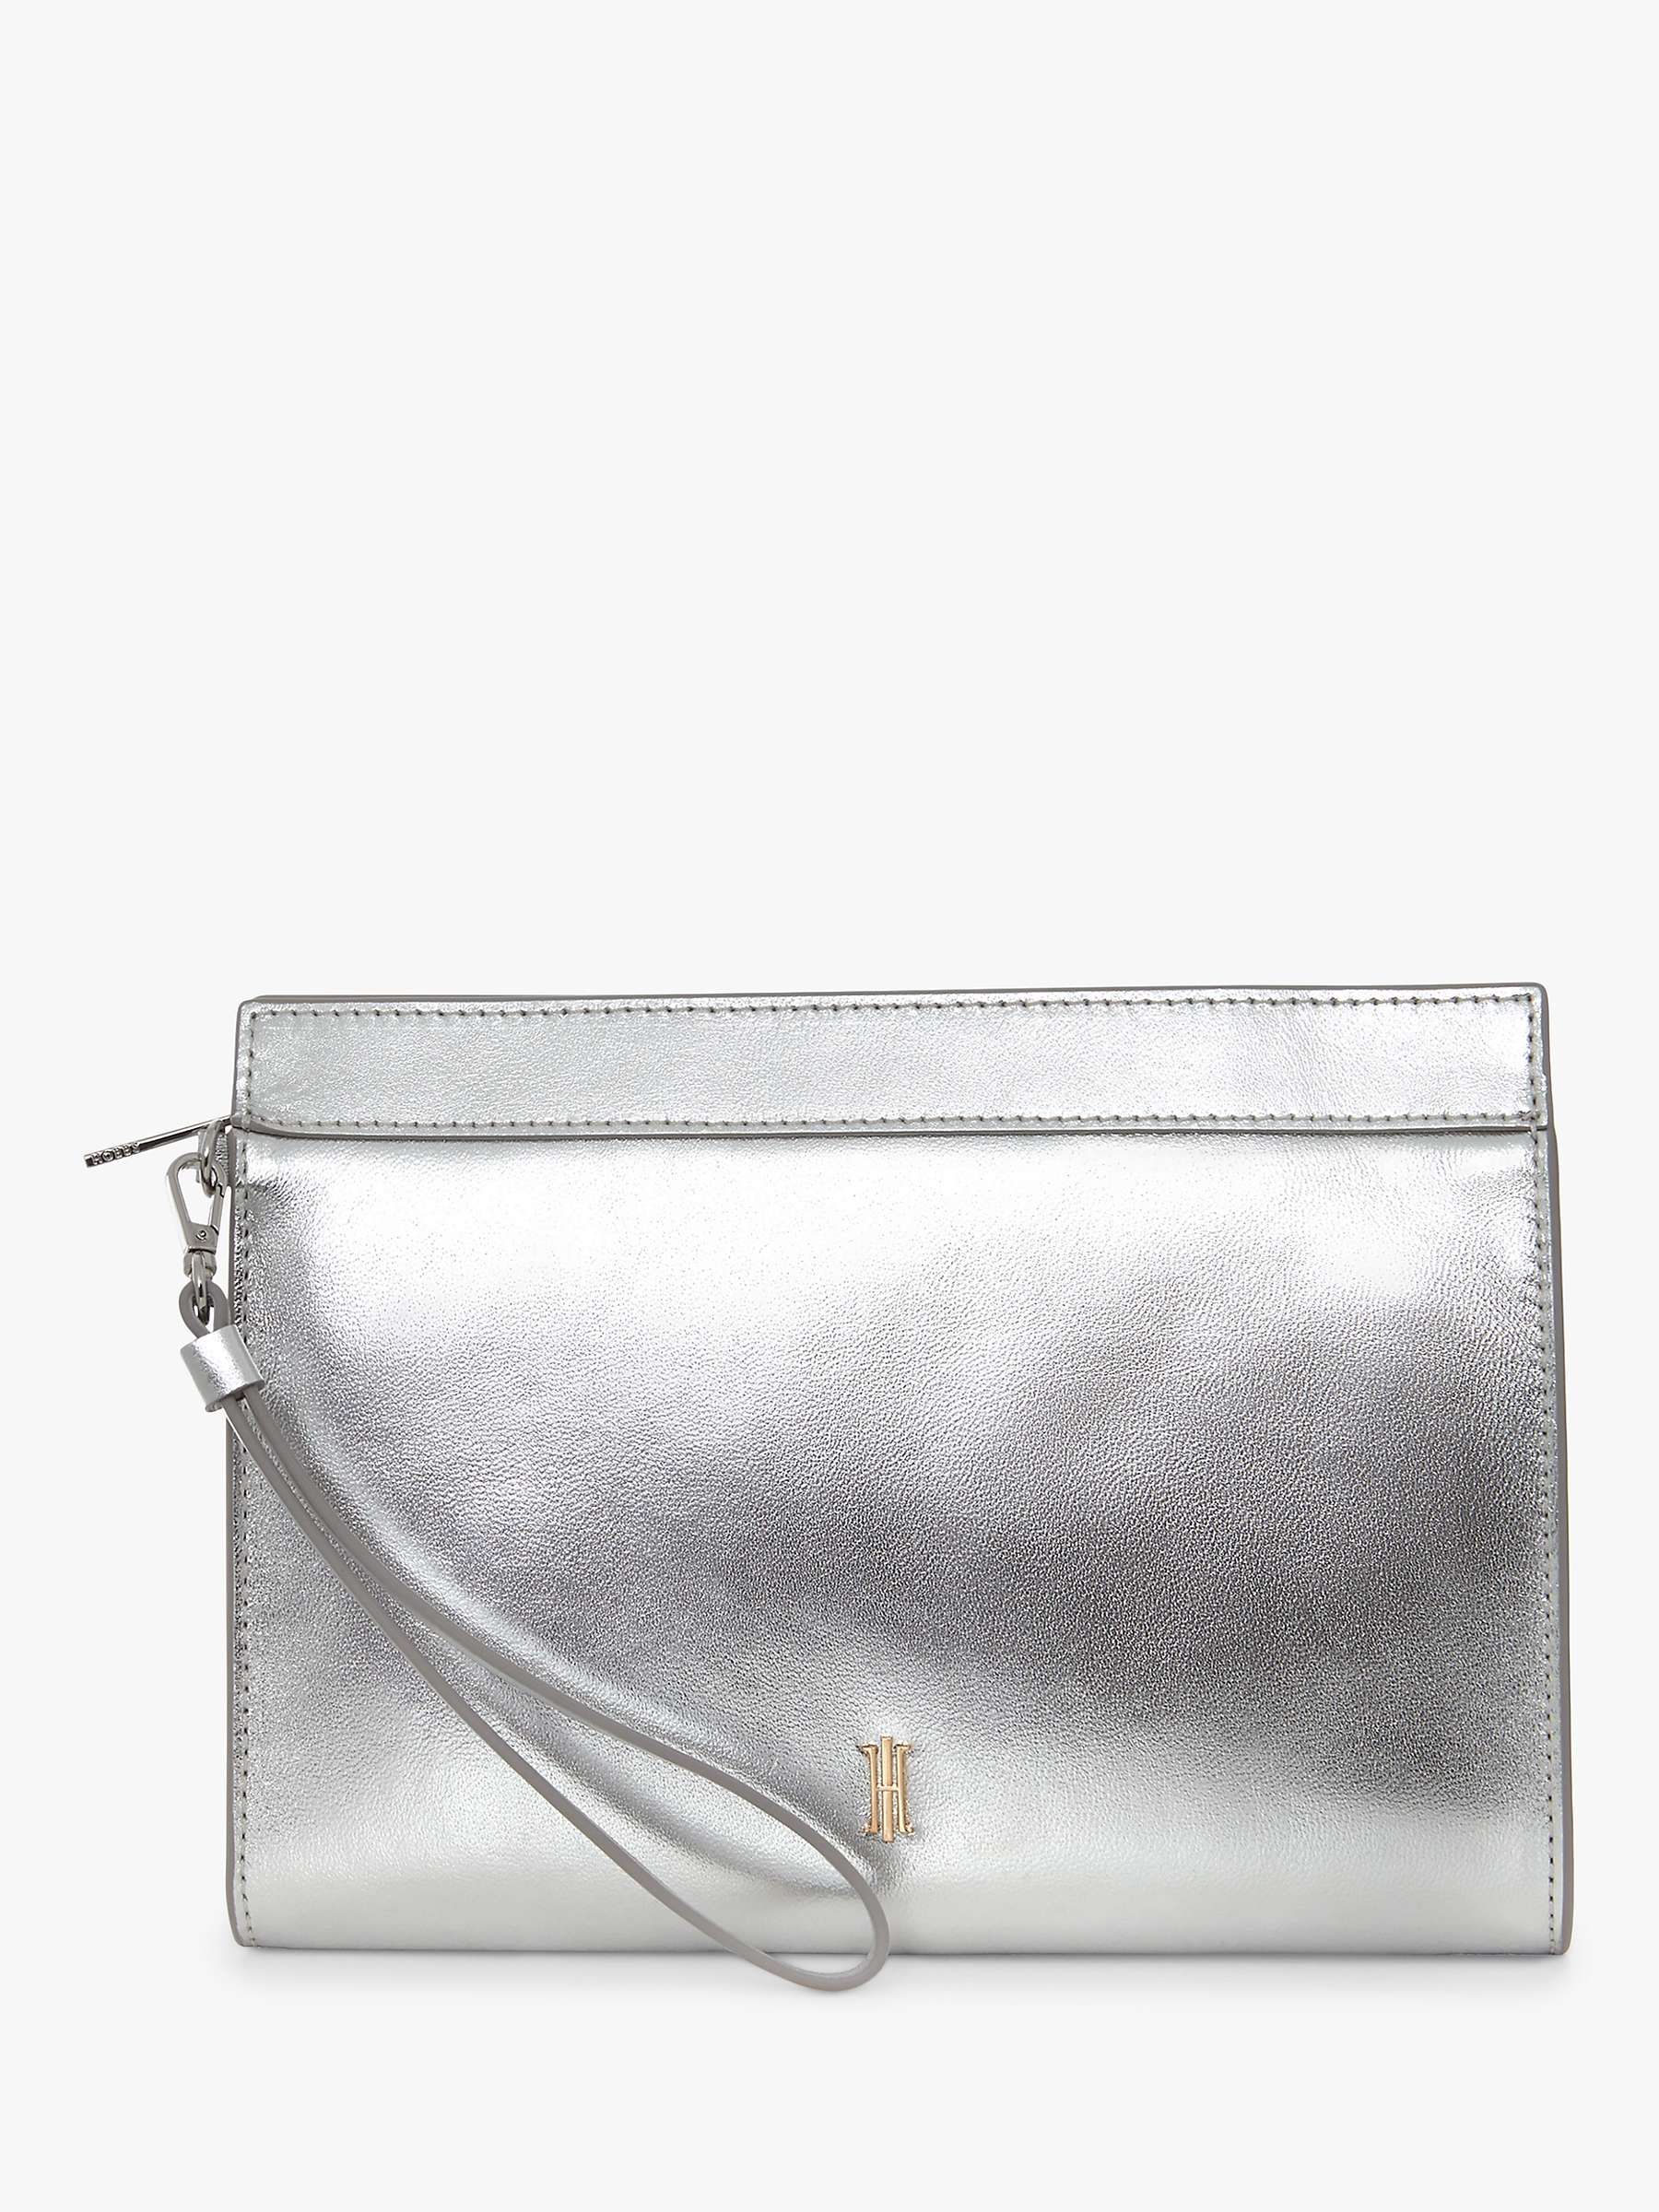 Buy Hobbs Catherine Leather Wristlet Bag, Silver Online at johnlewis.com